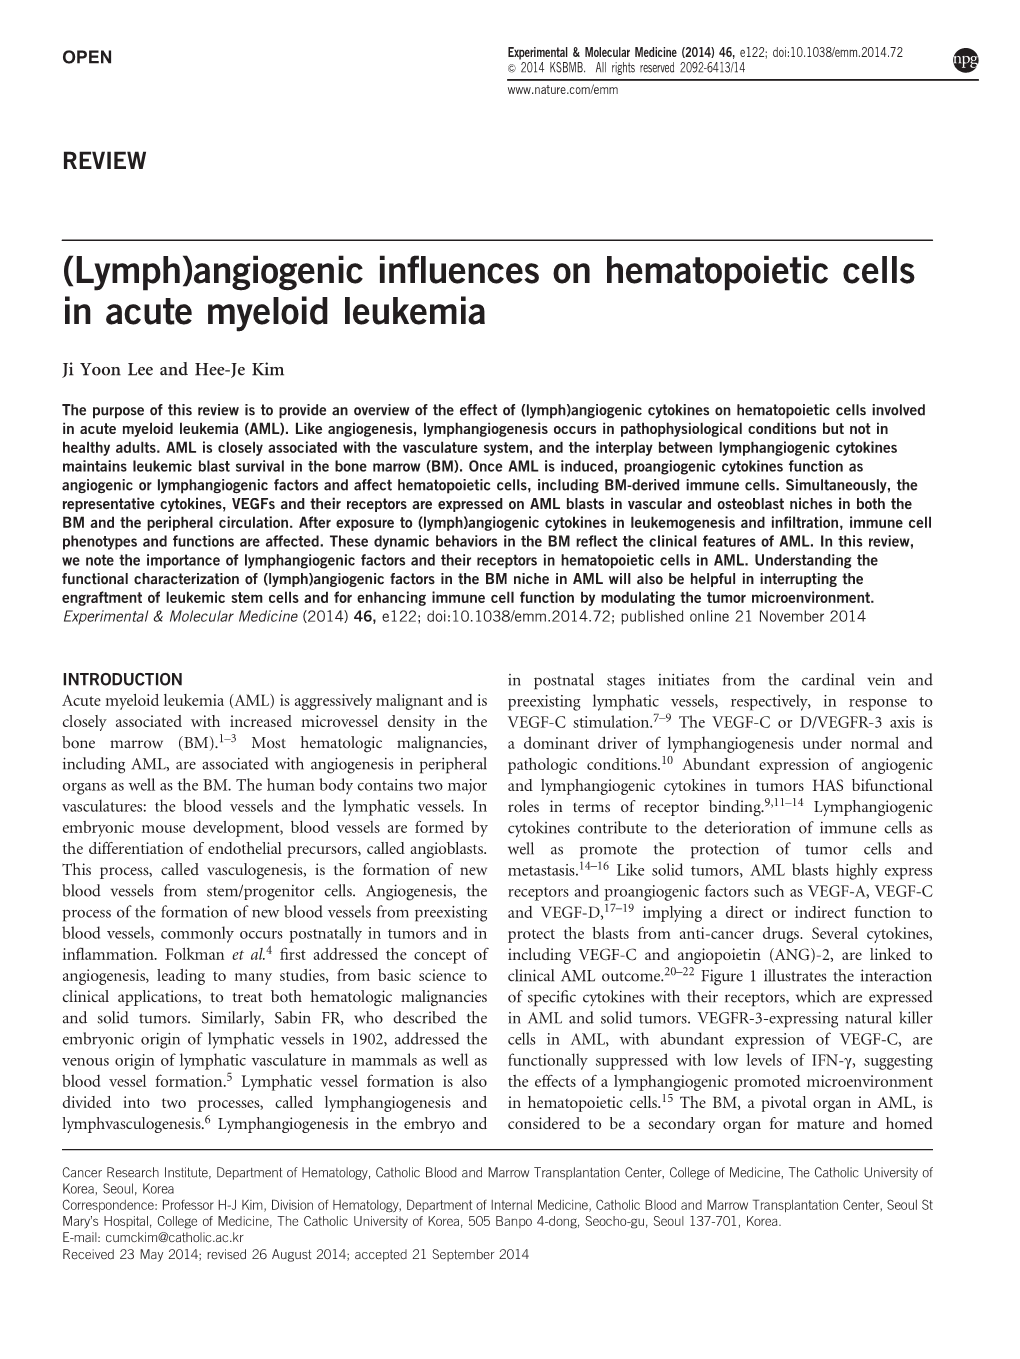 Angiogenic Influences on Hematopoietic Cells In